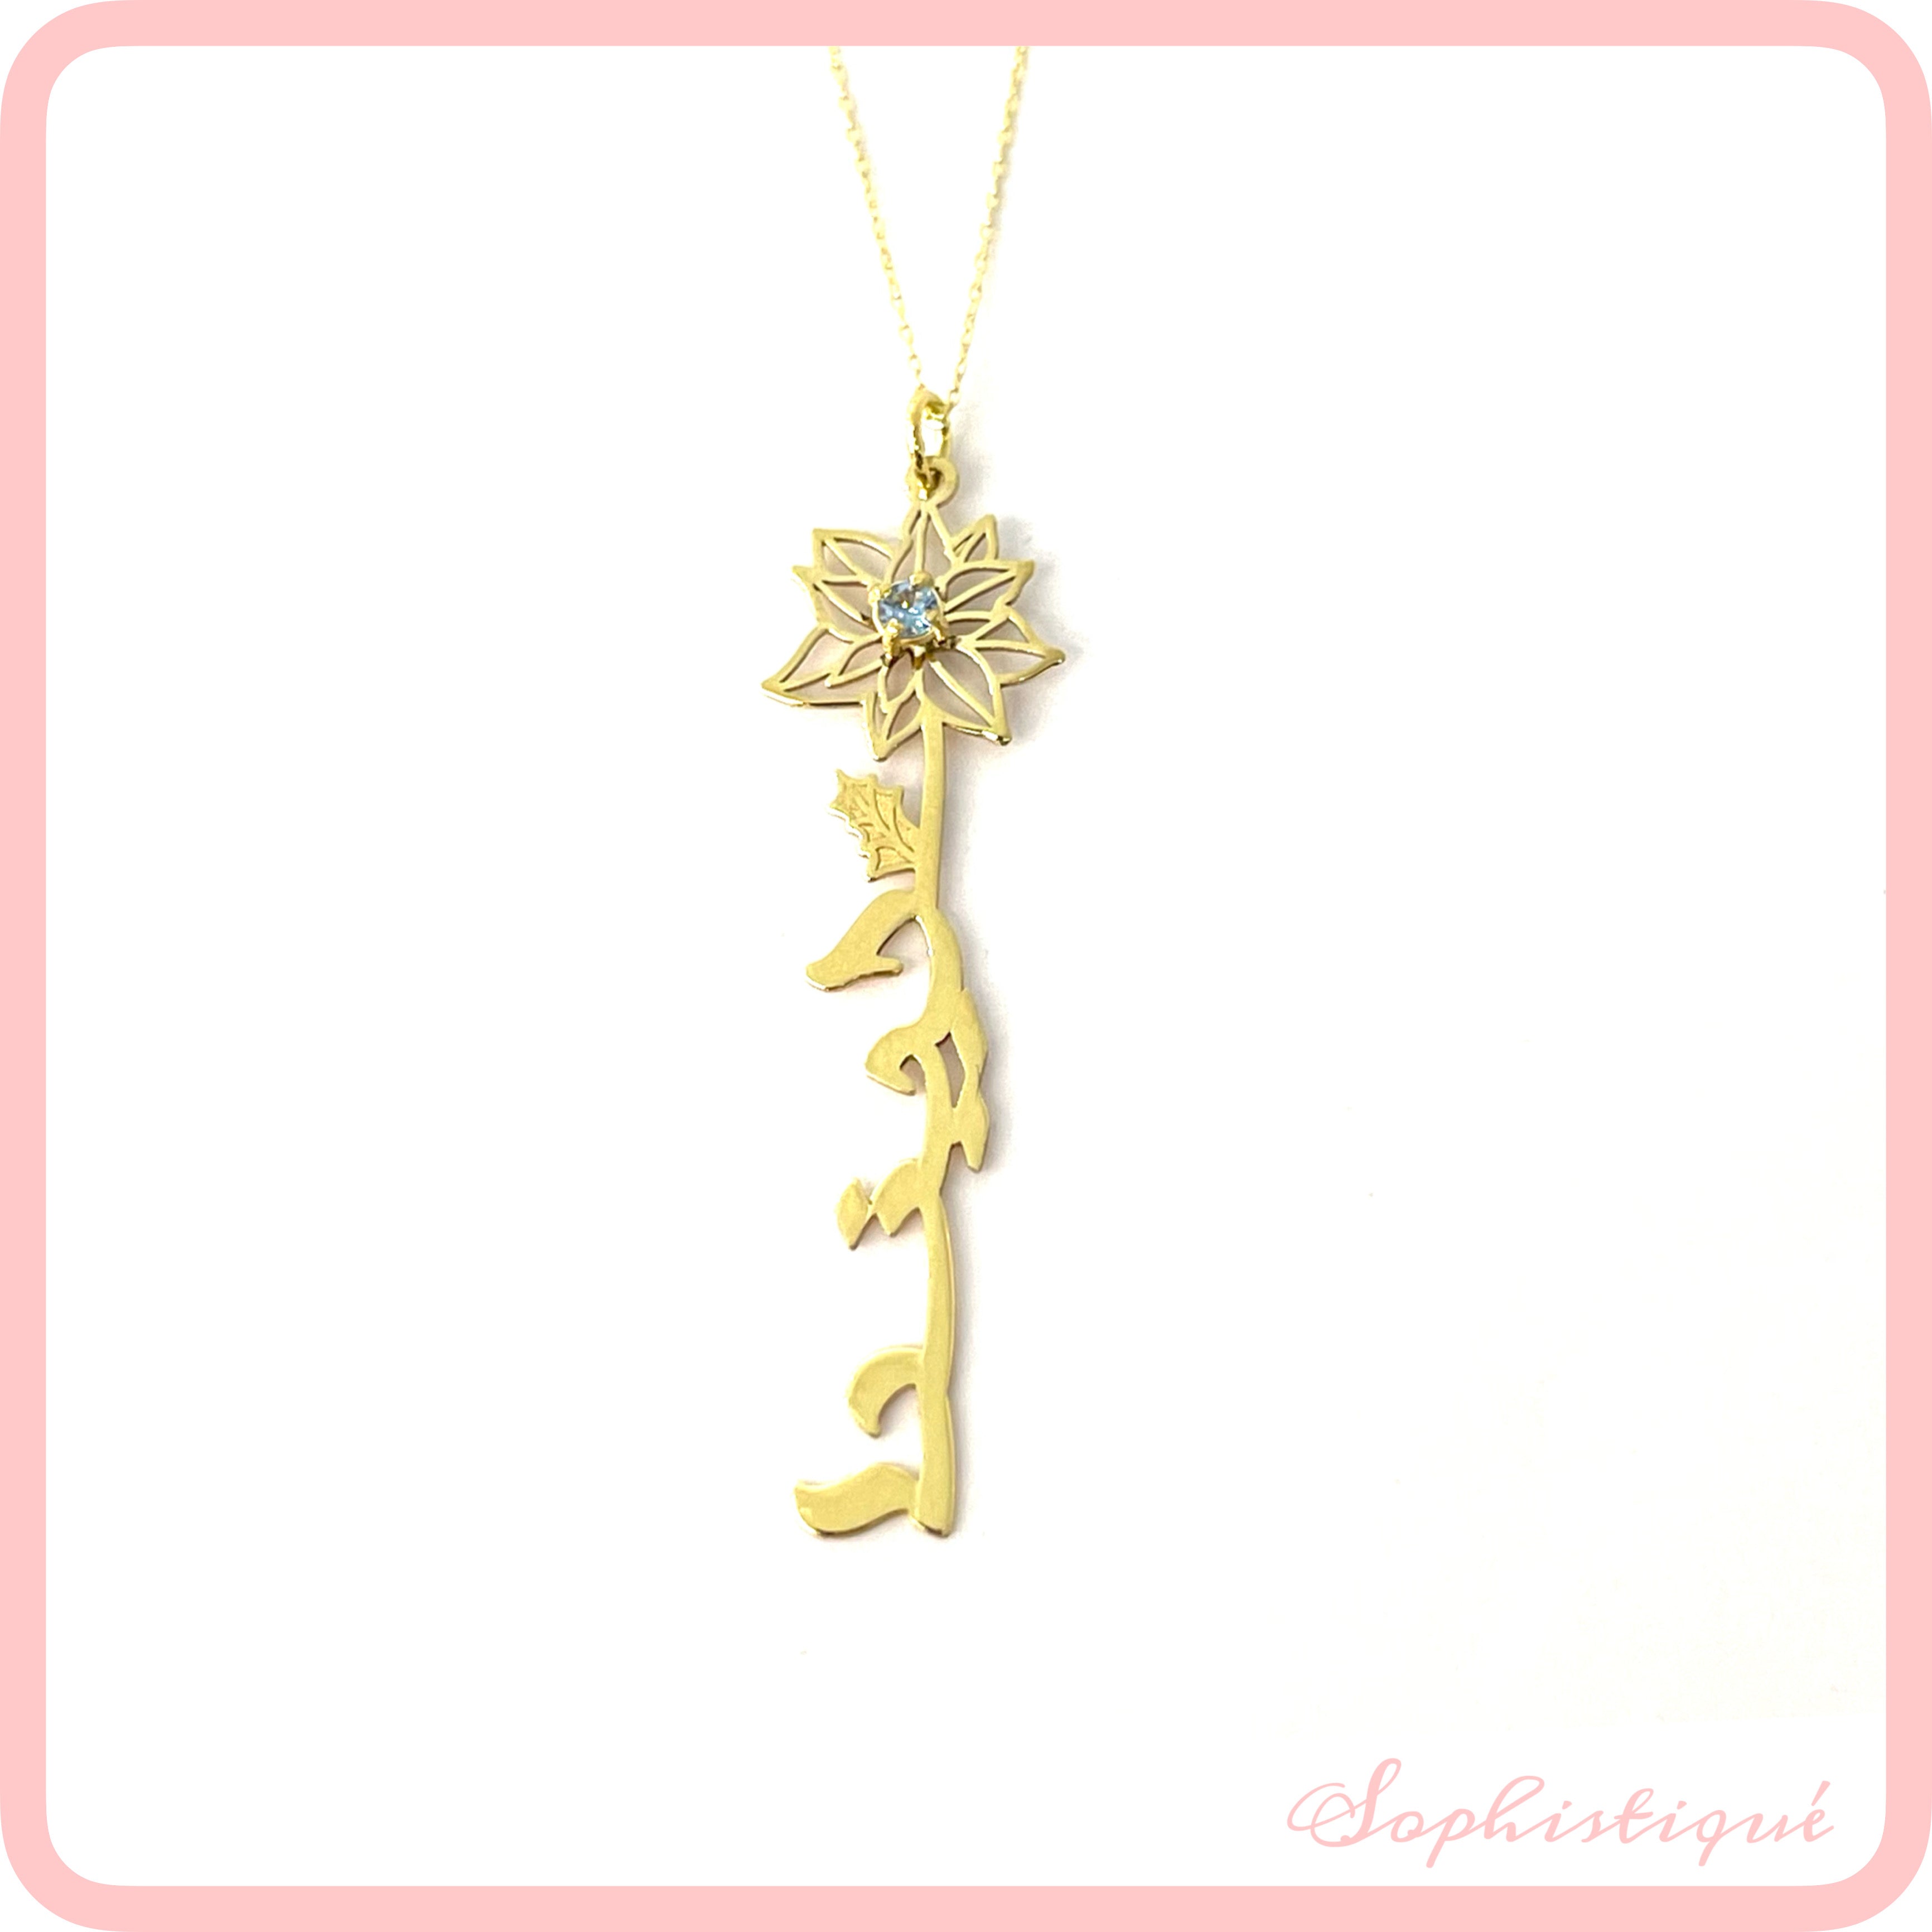 Birth Flower With Birthstone Pendant/Necklace